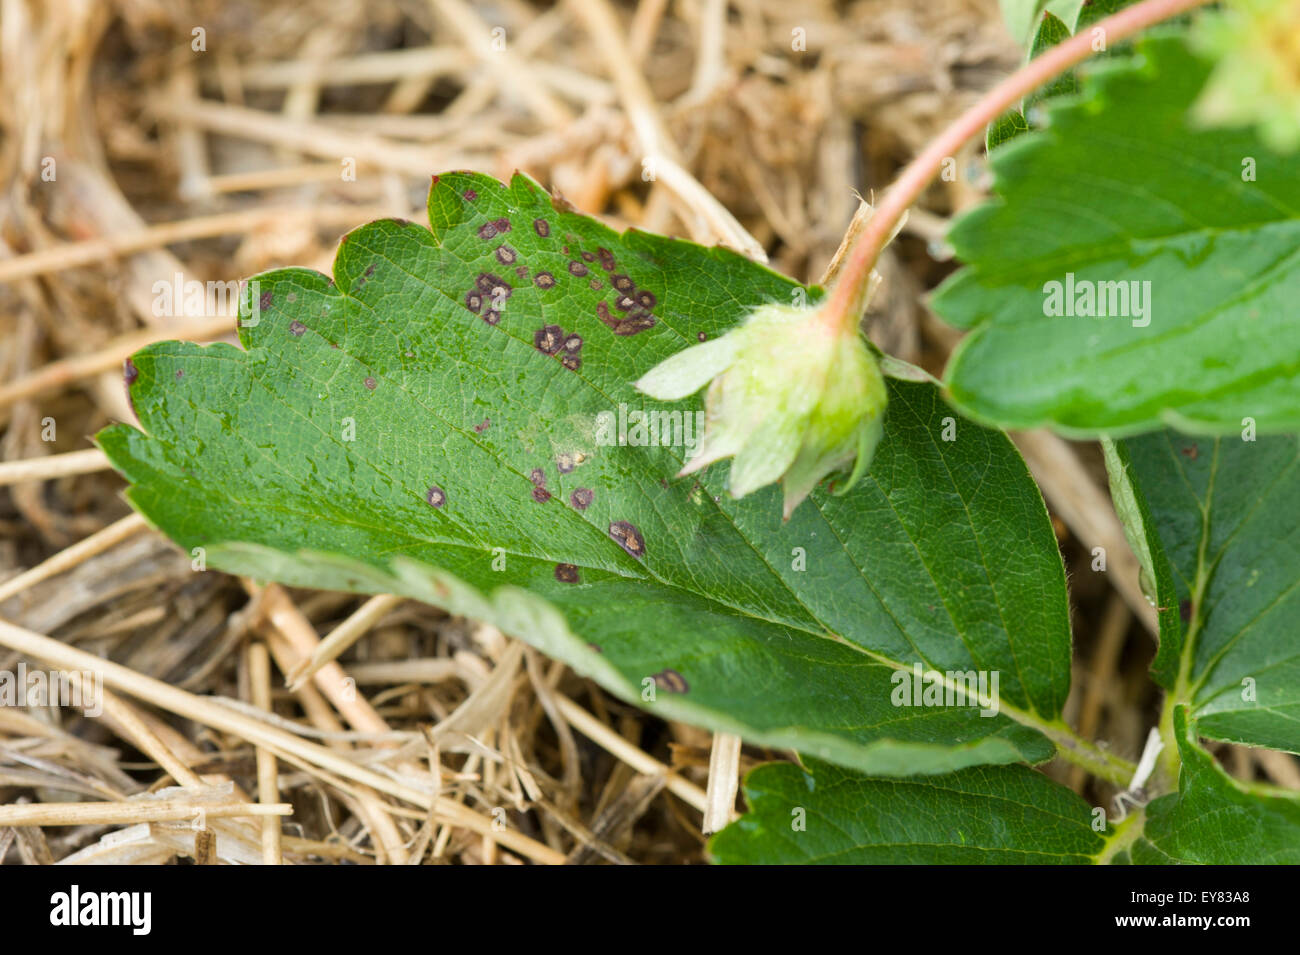 Leaf spot disease on strawberry leaf Stock Photo